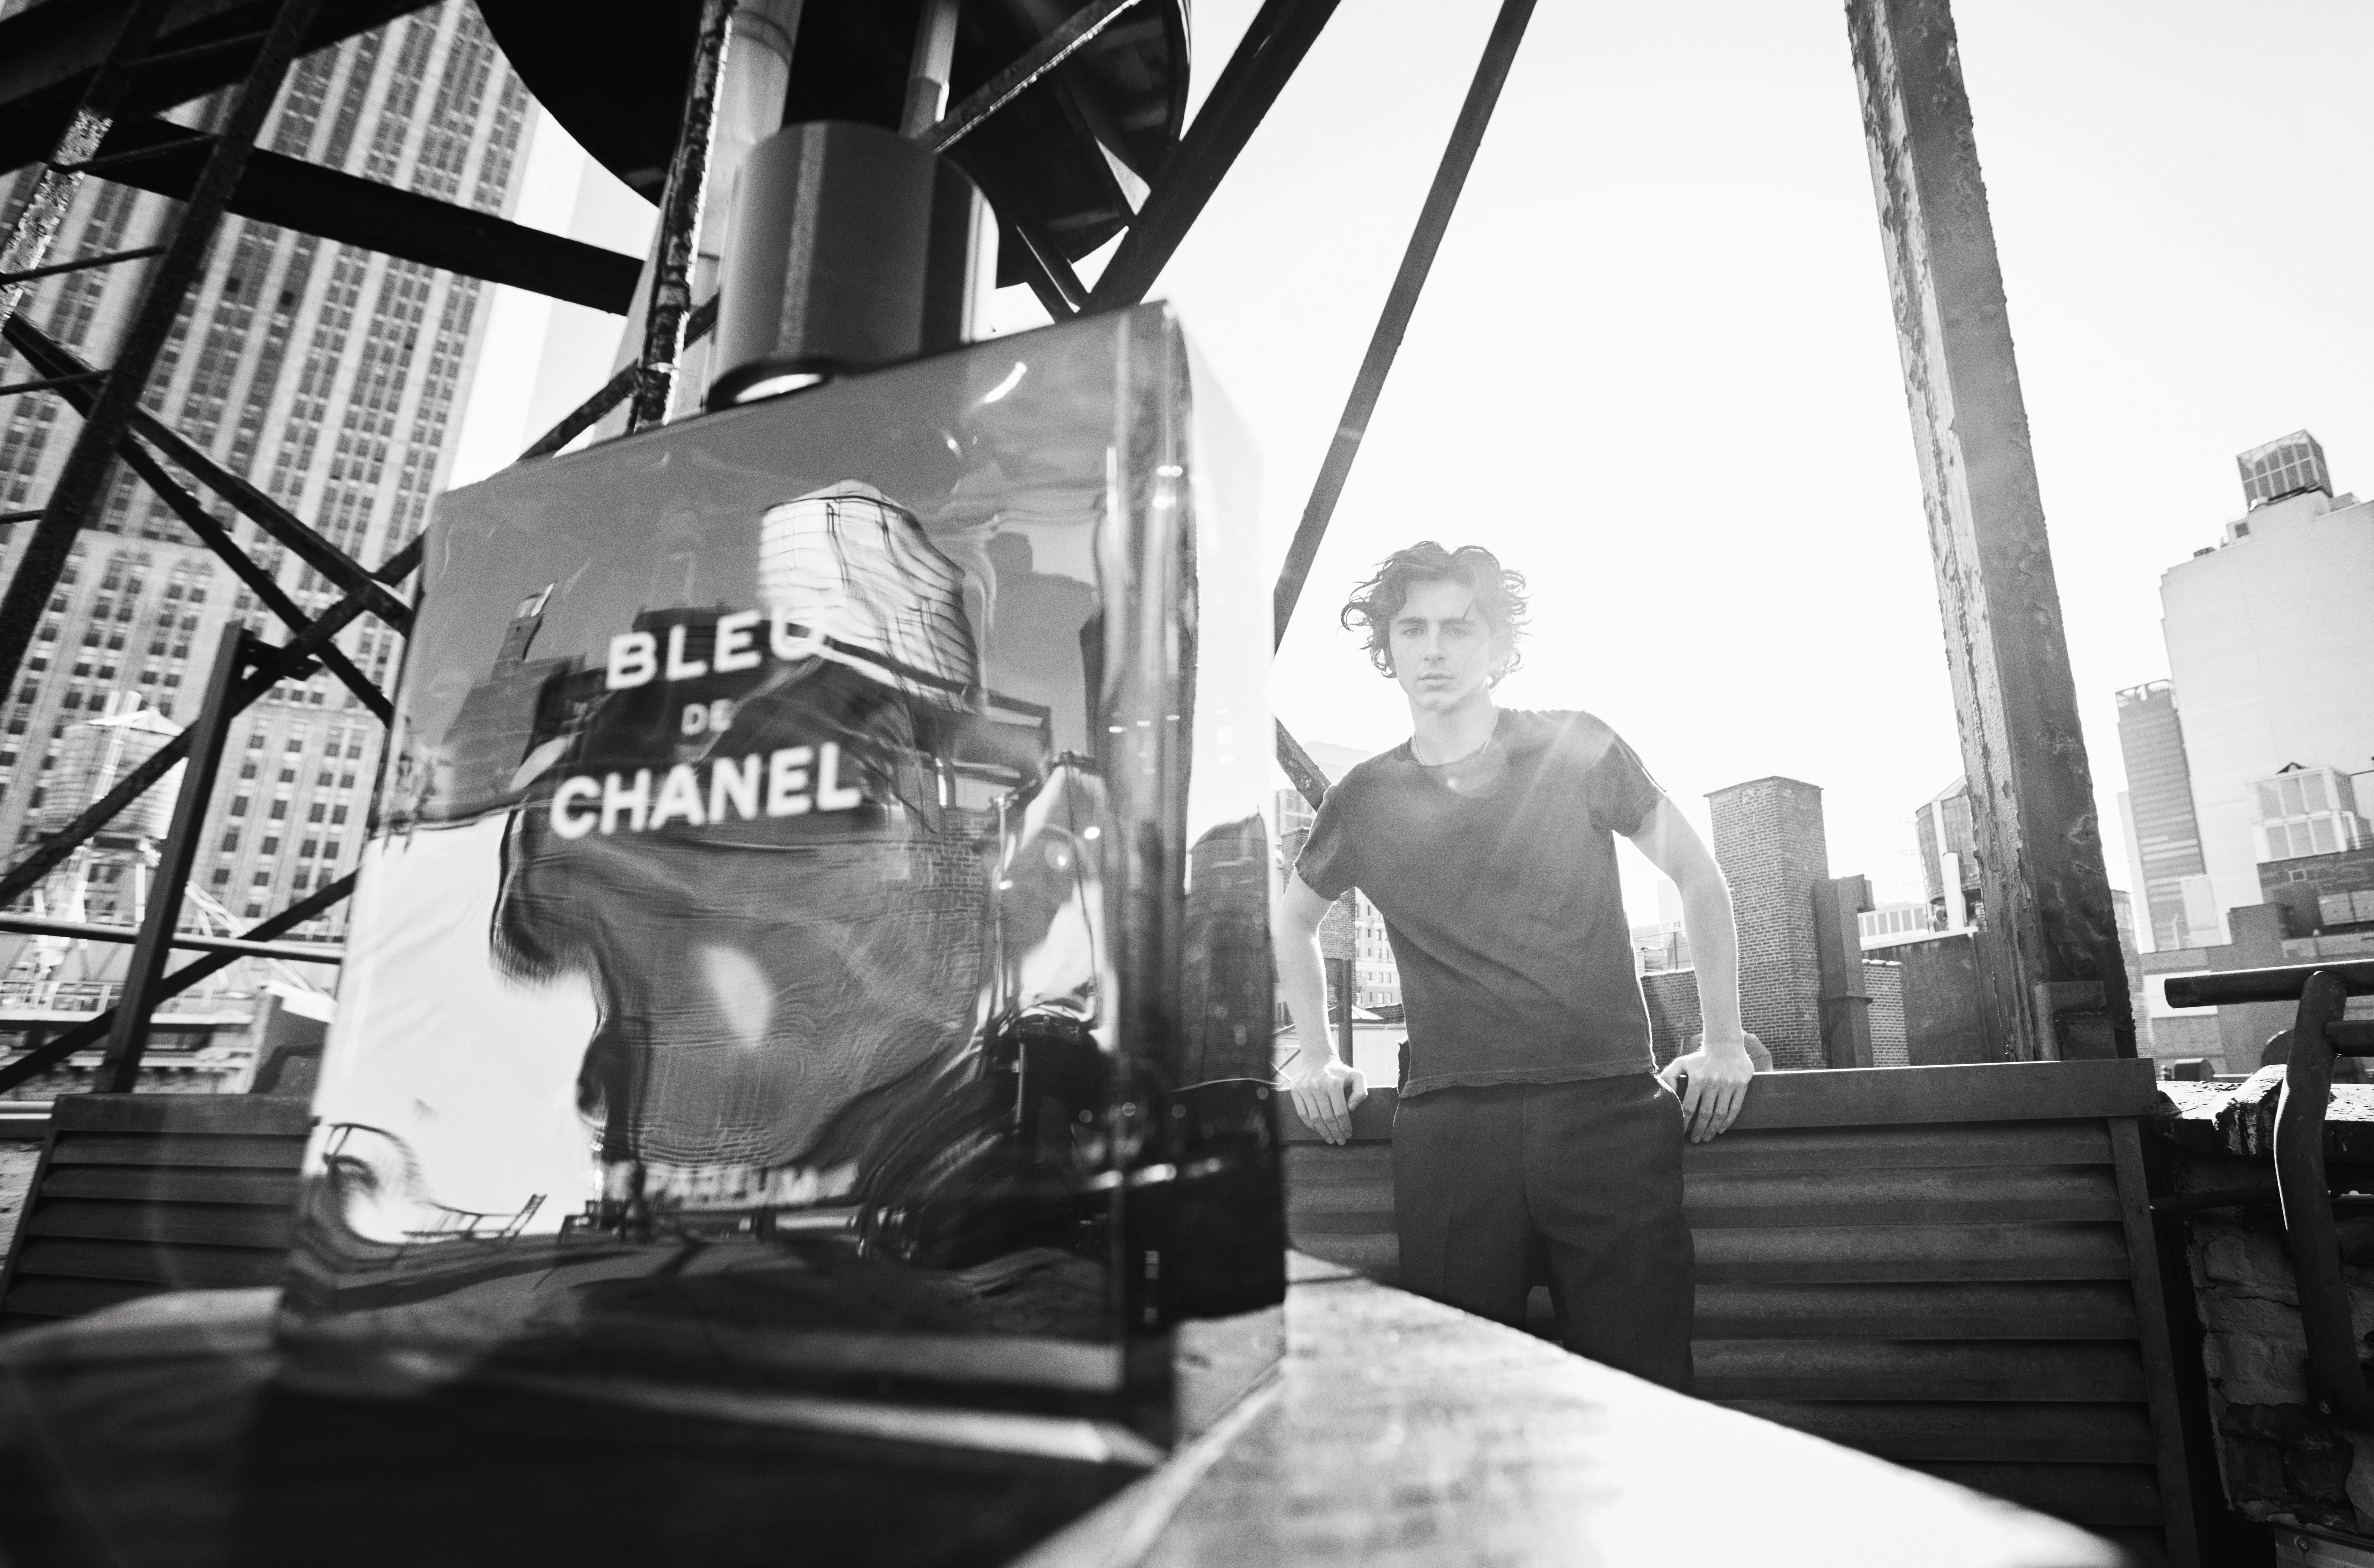 Timothée Chalamet, nuevo embajador del perfume Bleu de Chanel